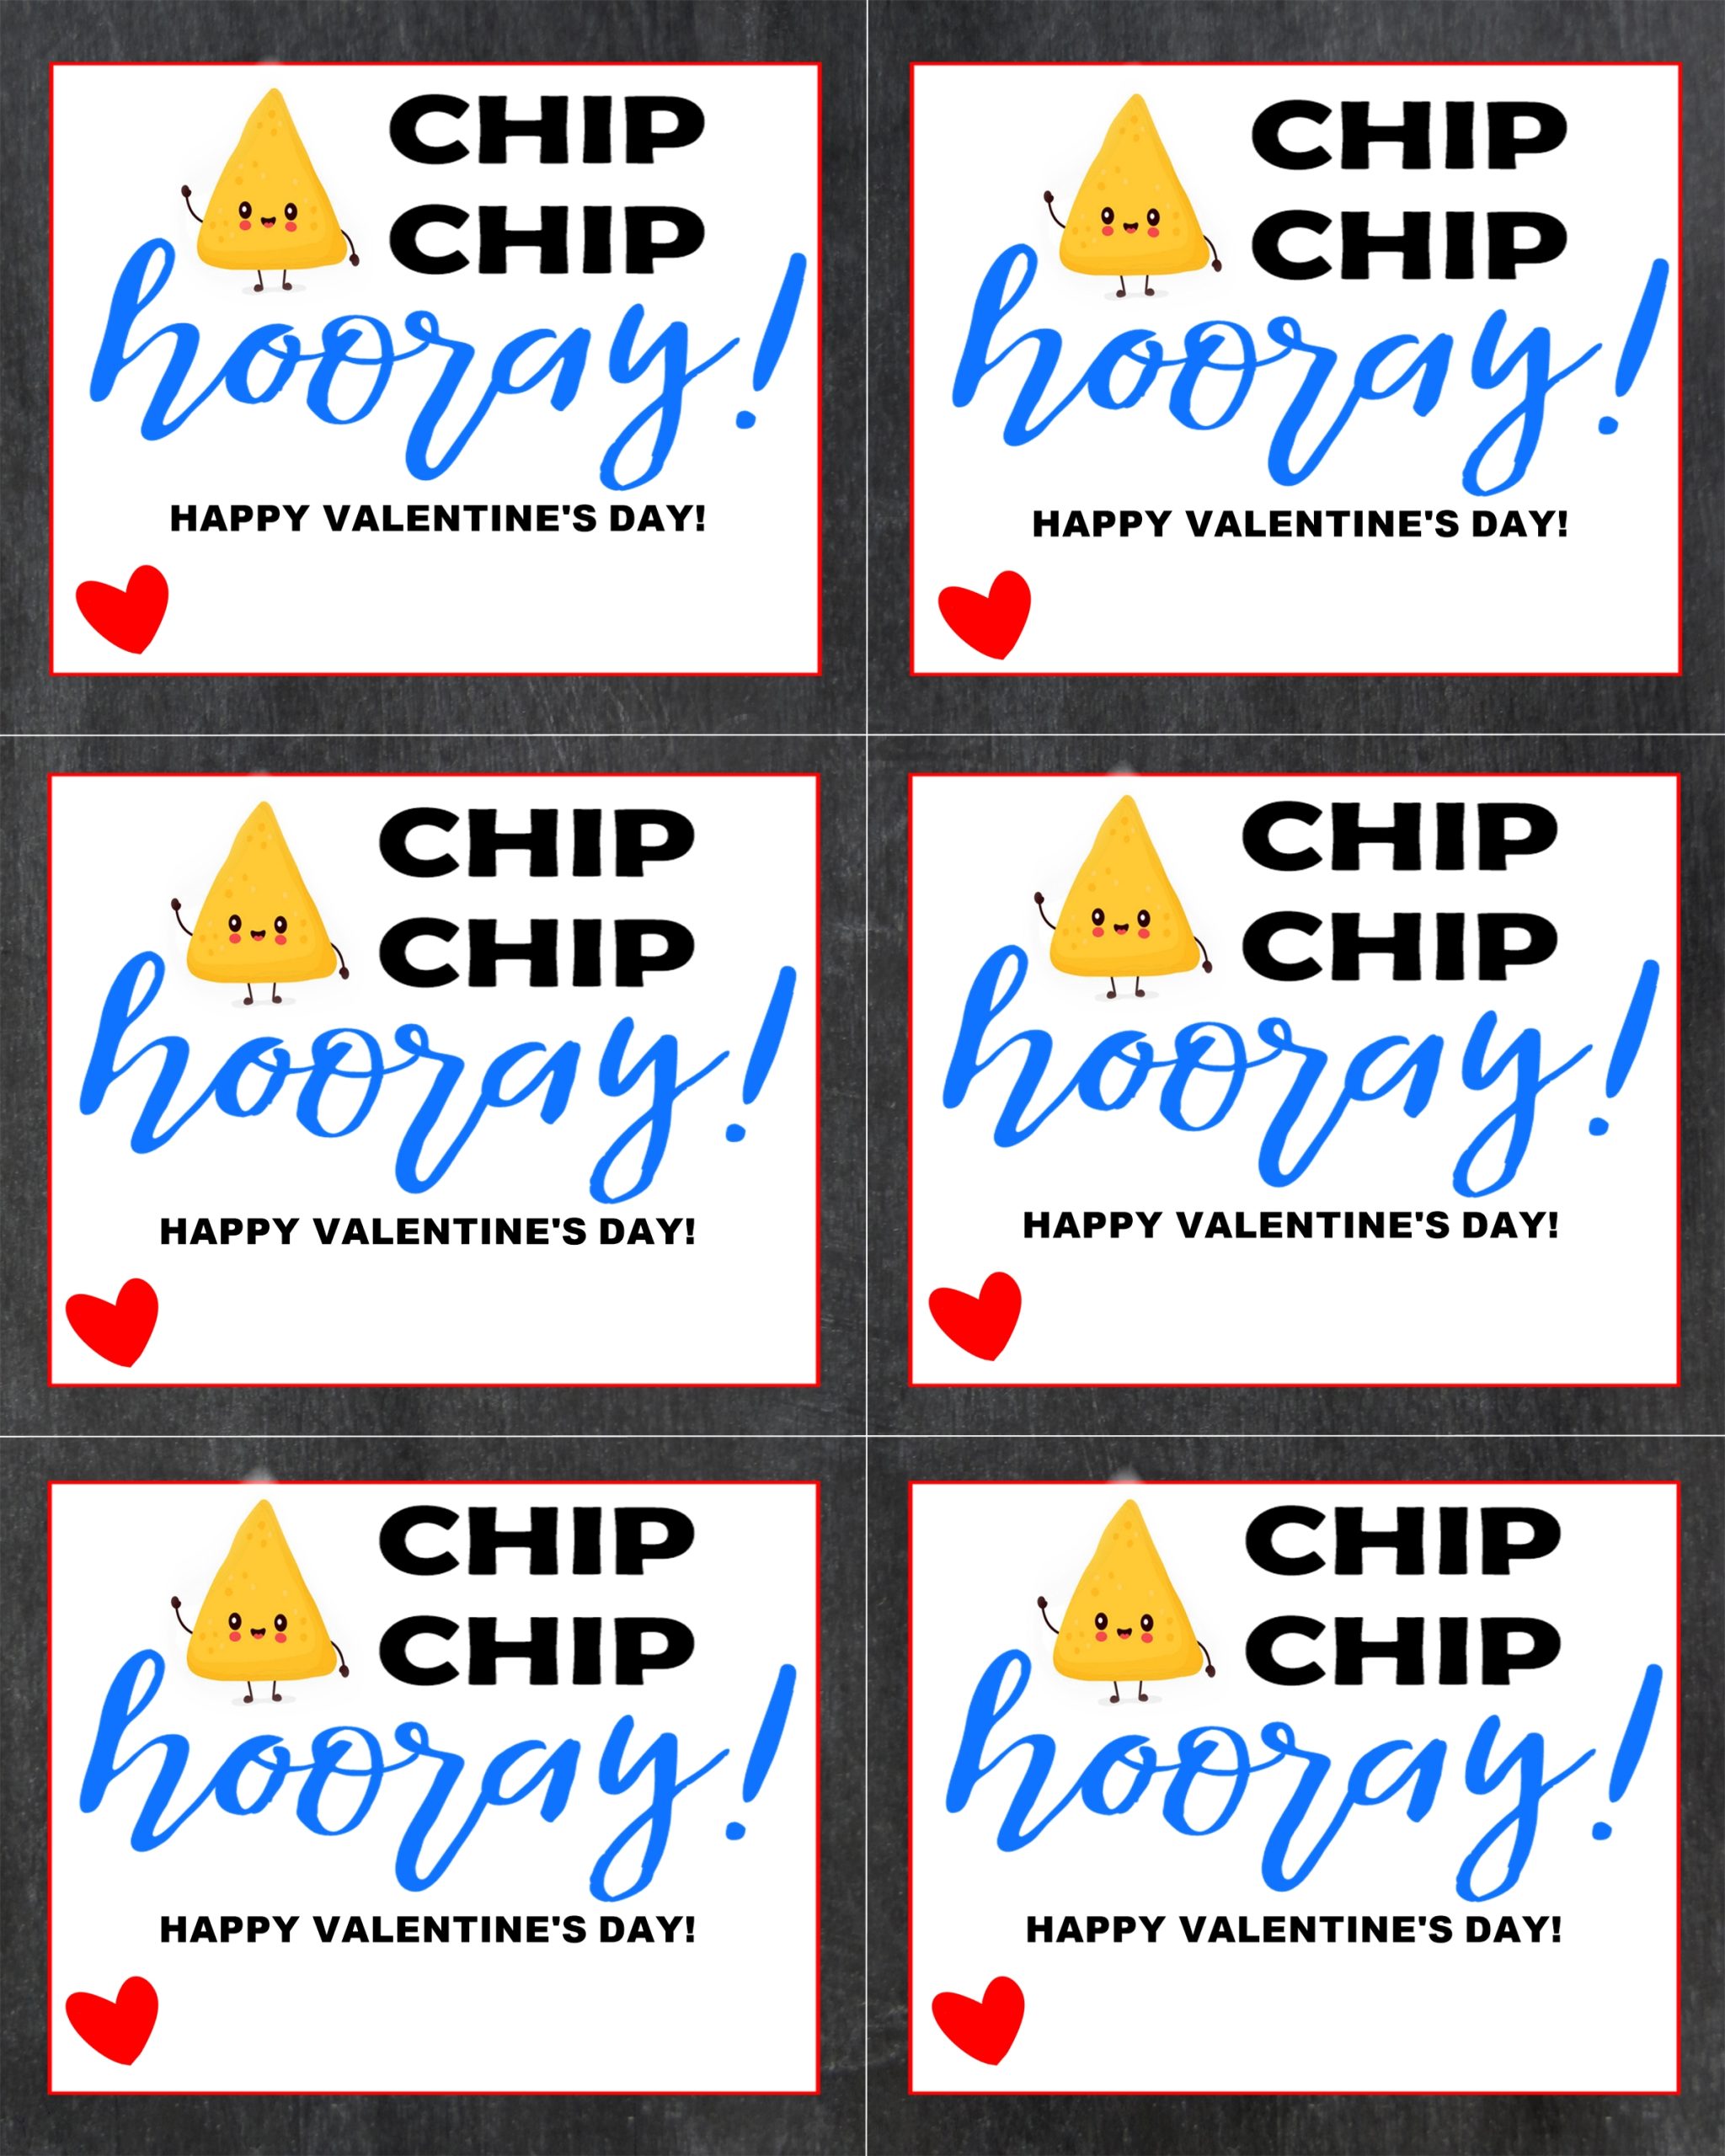 Chip Chip Hooray Image 2